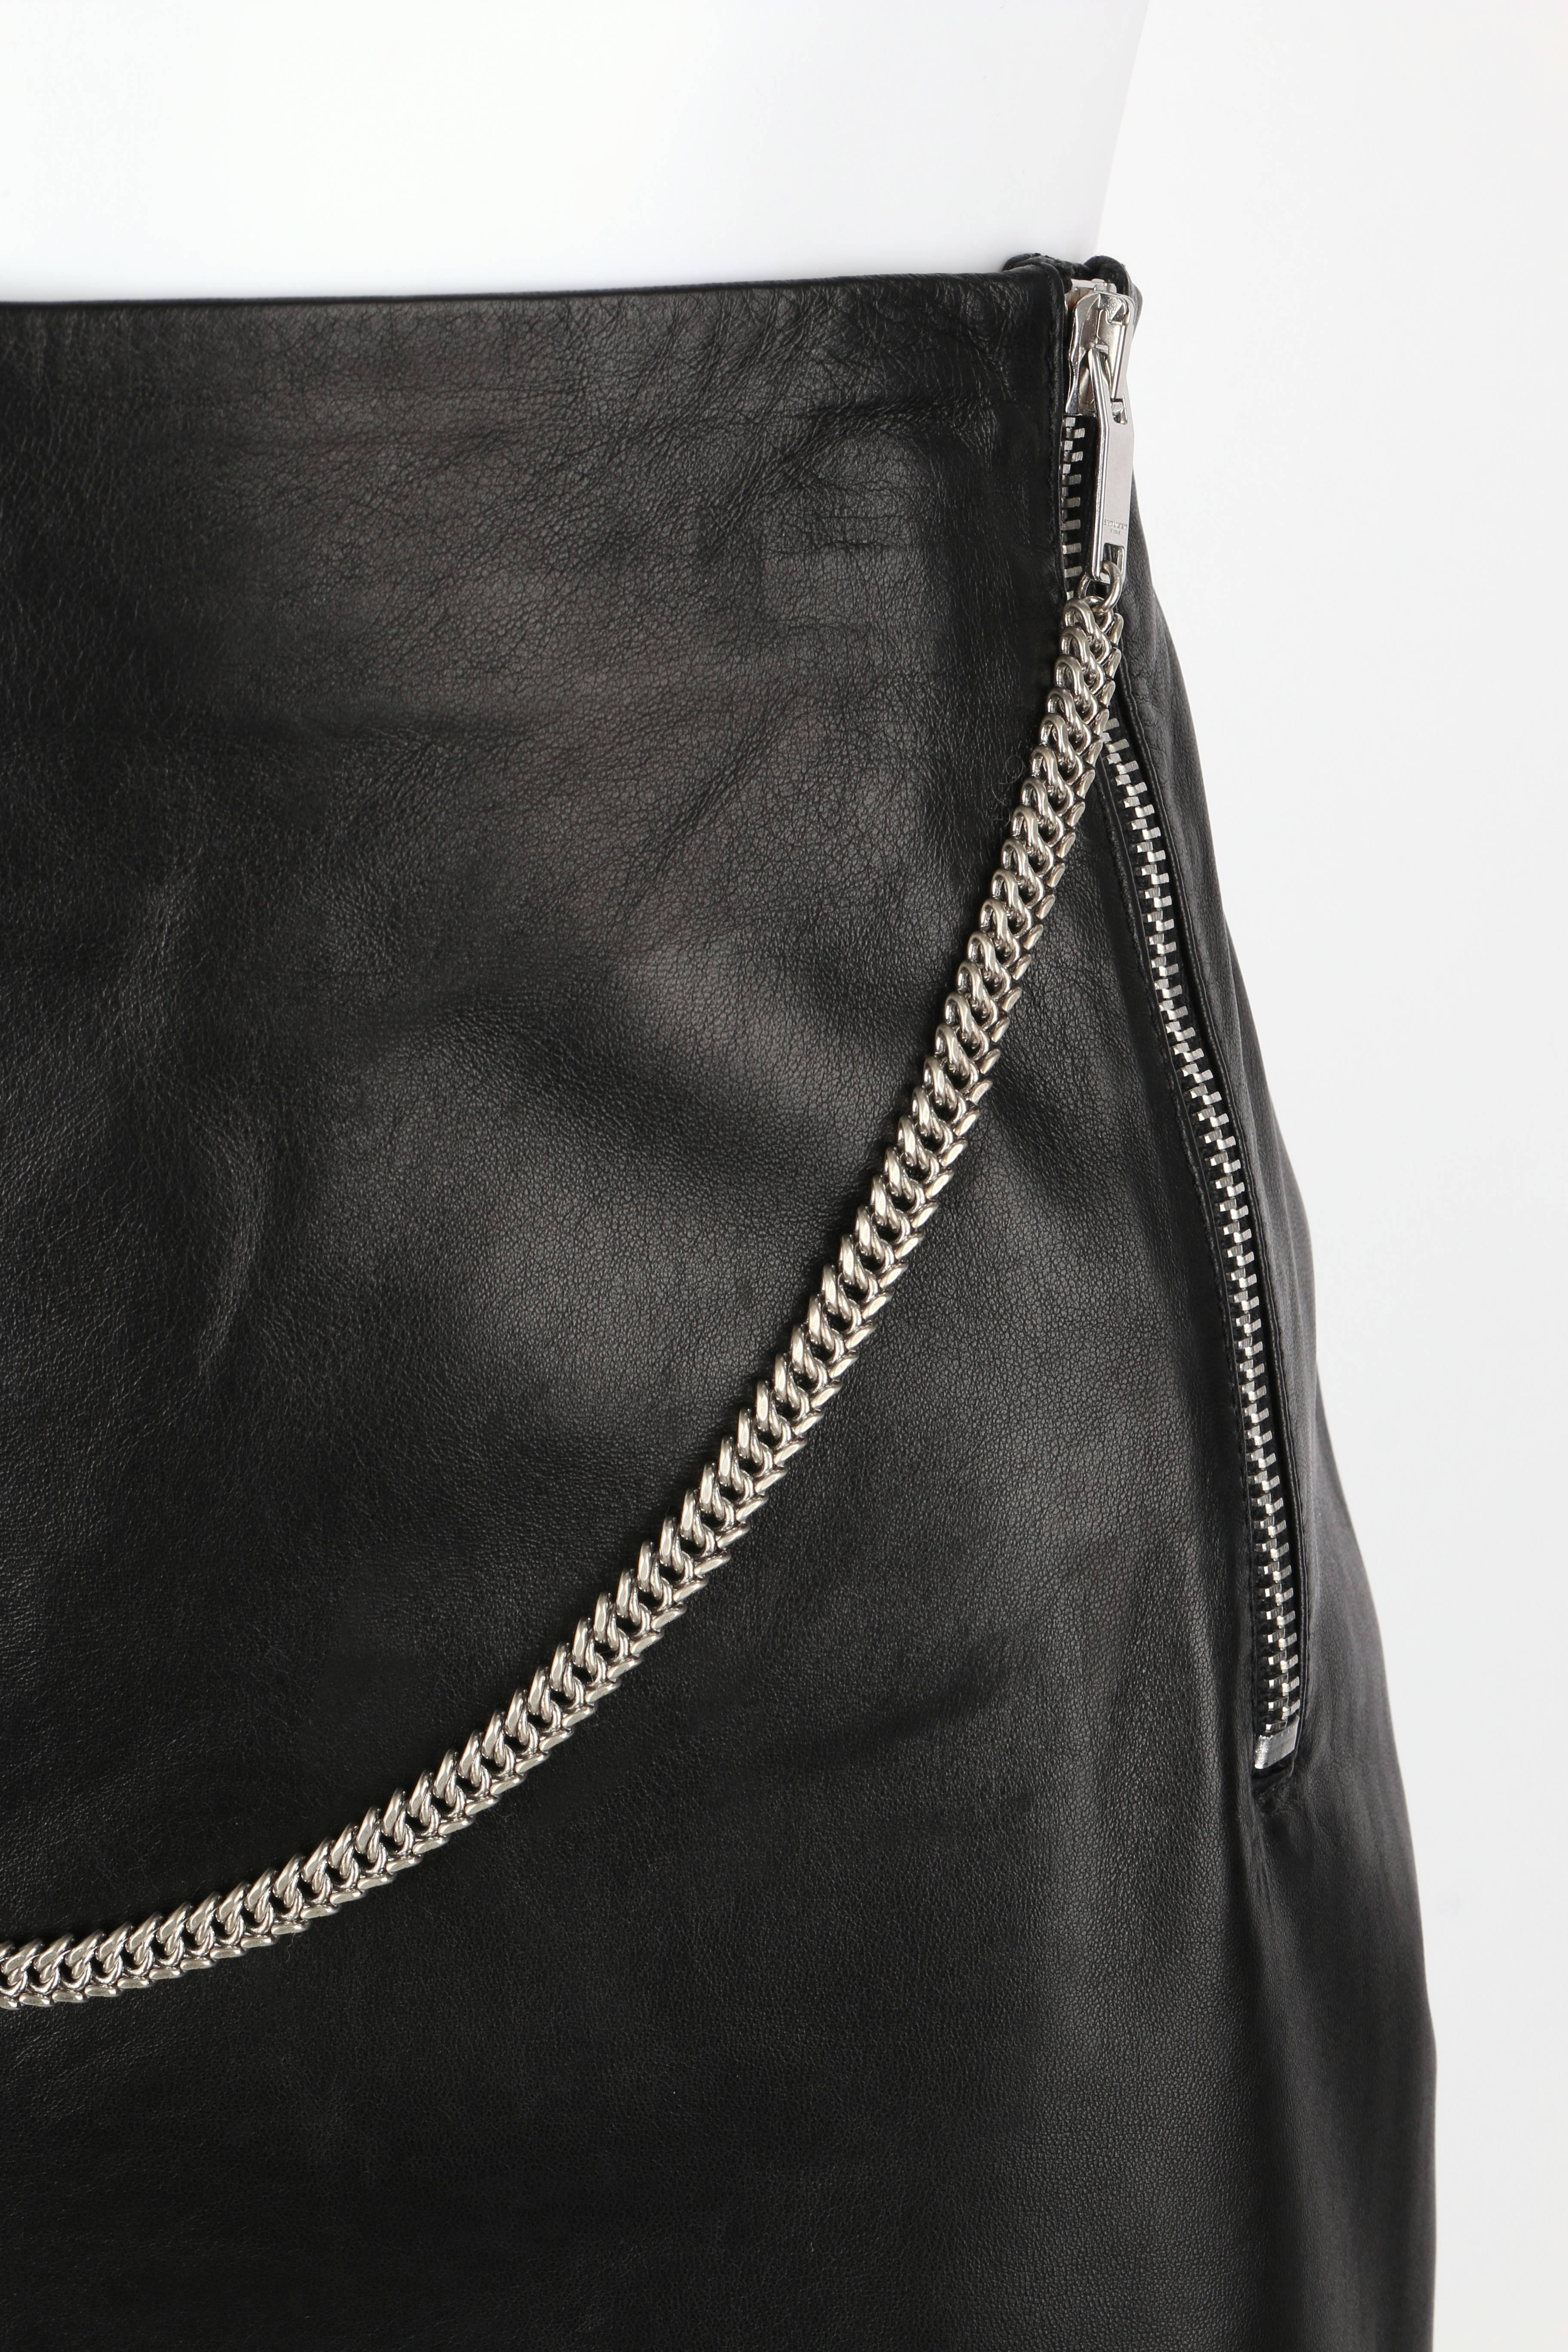 SAINT LAURENT c.2012 Black Lambskin Leather Silver Chain Zipper Mini Skirt  4